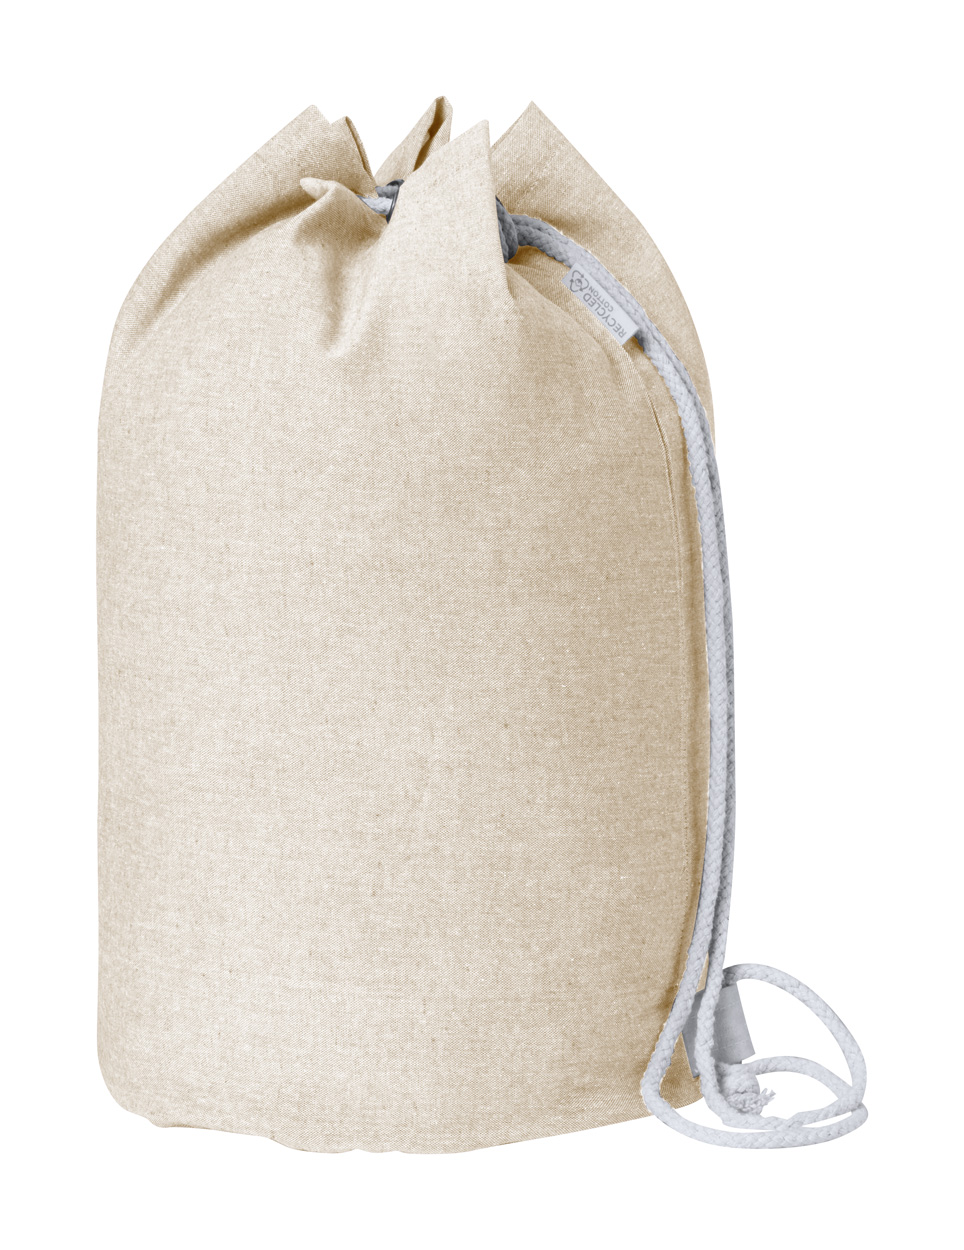 Promo  Bandam sailor bag